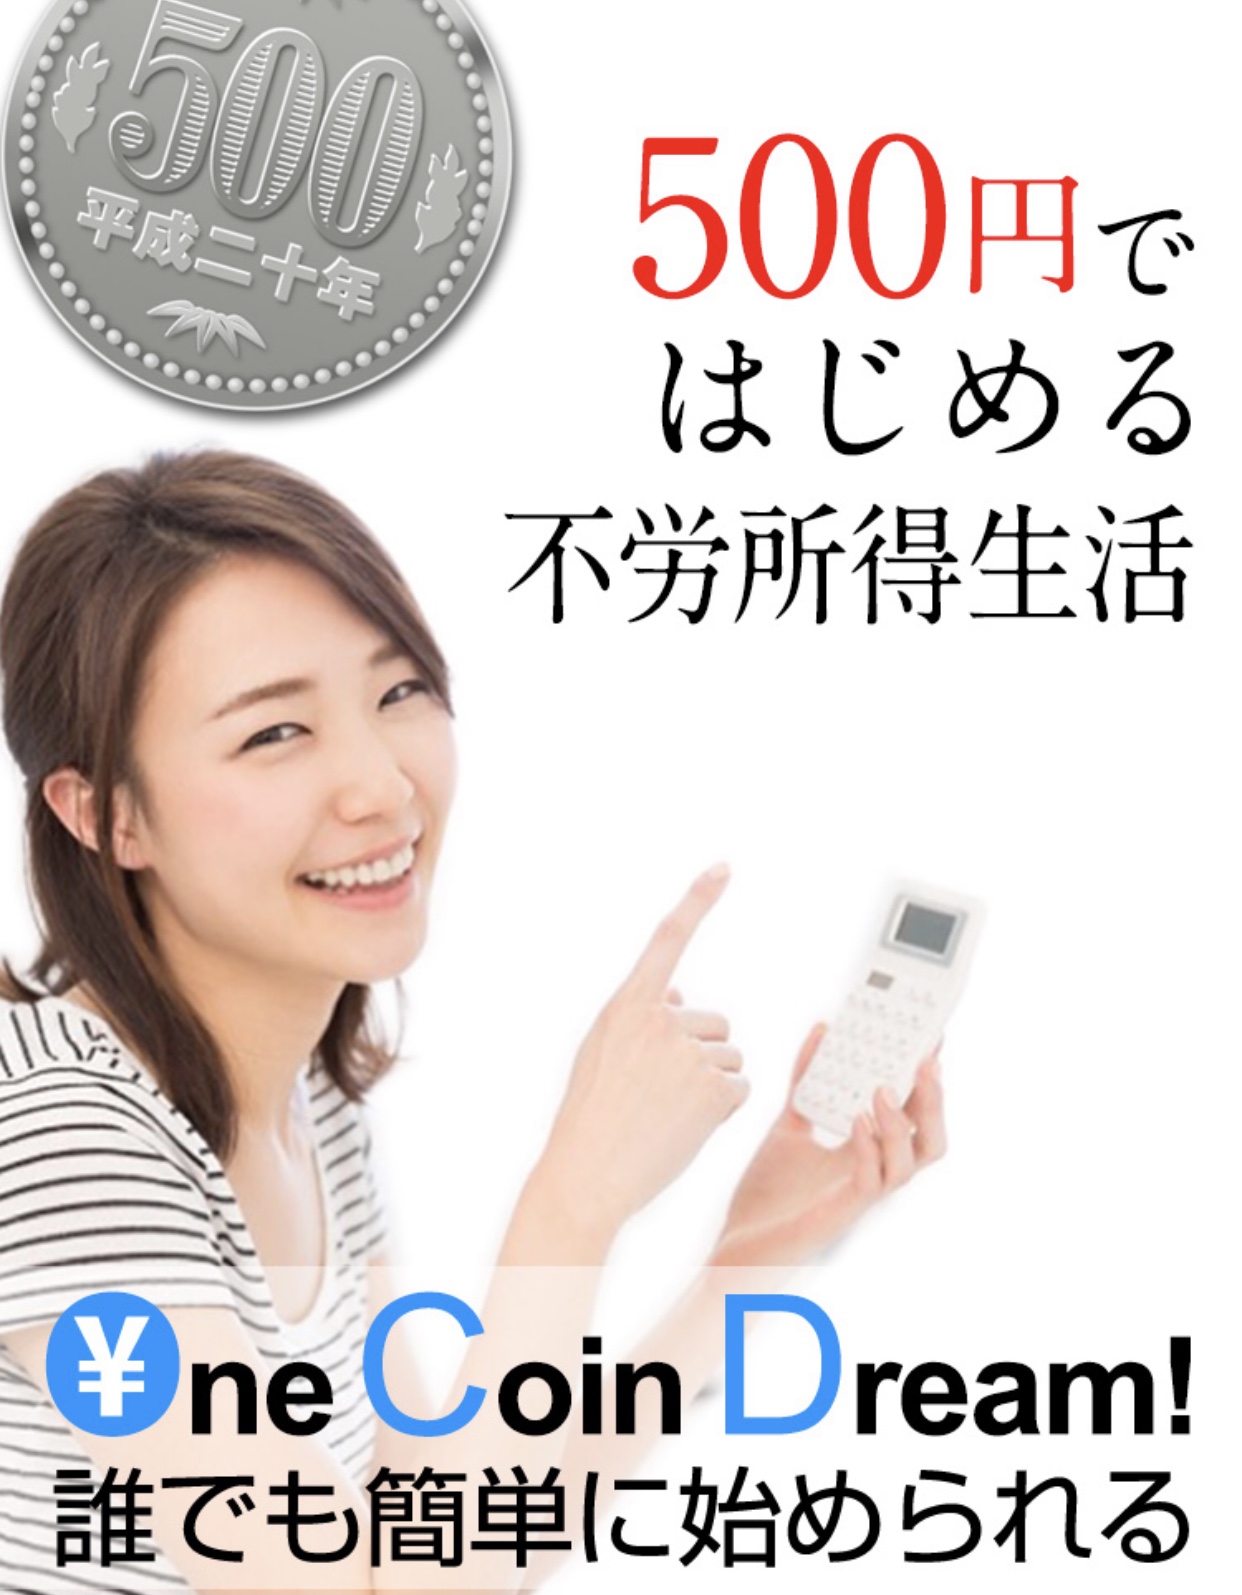 One Coin Dream! /ワンコインドリーム